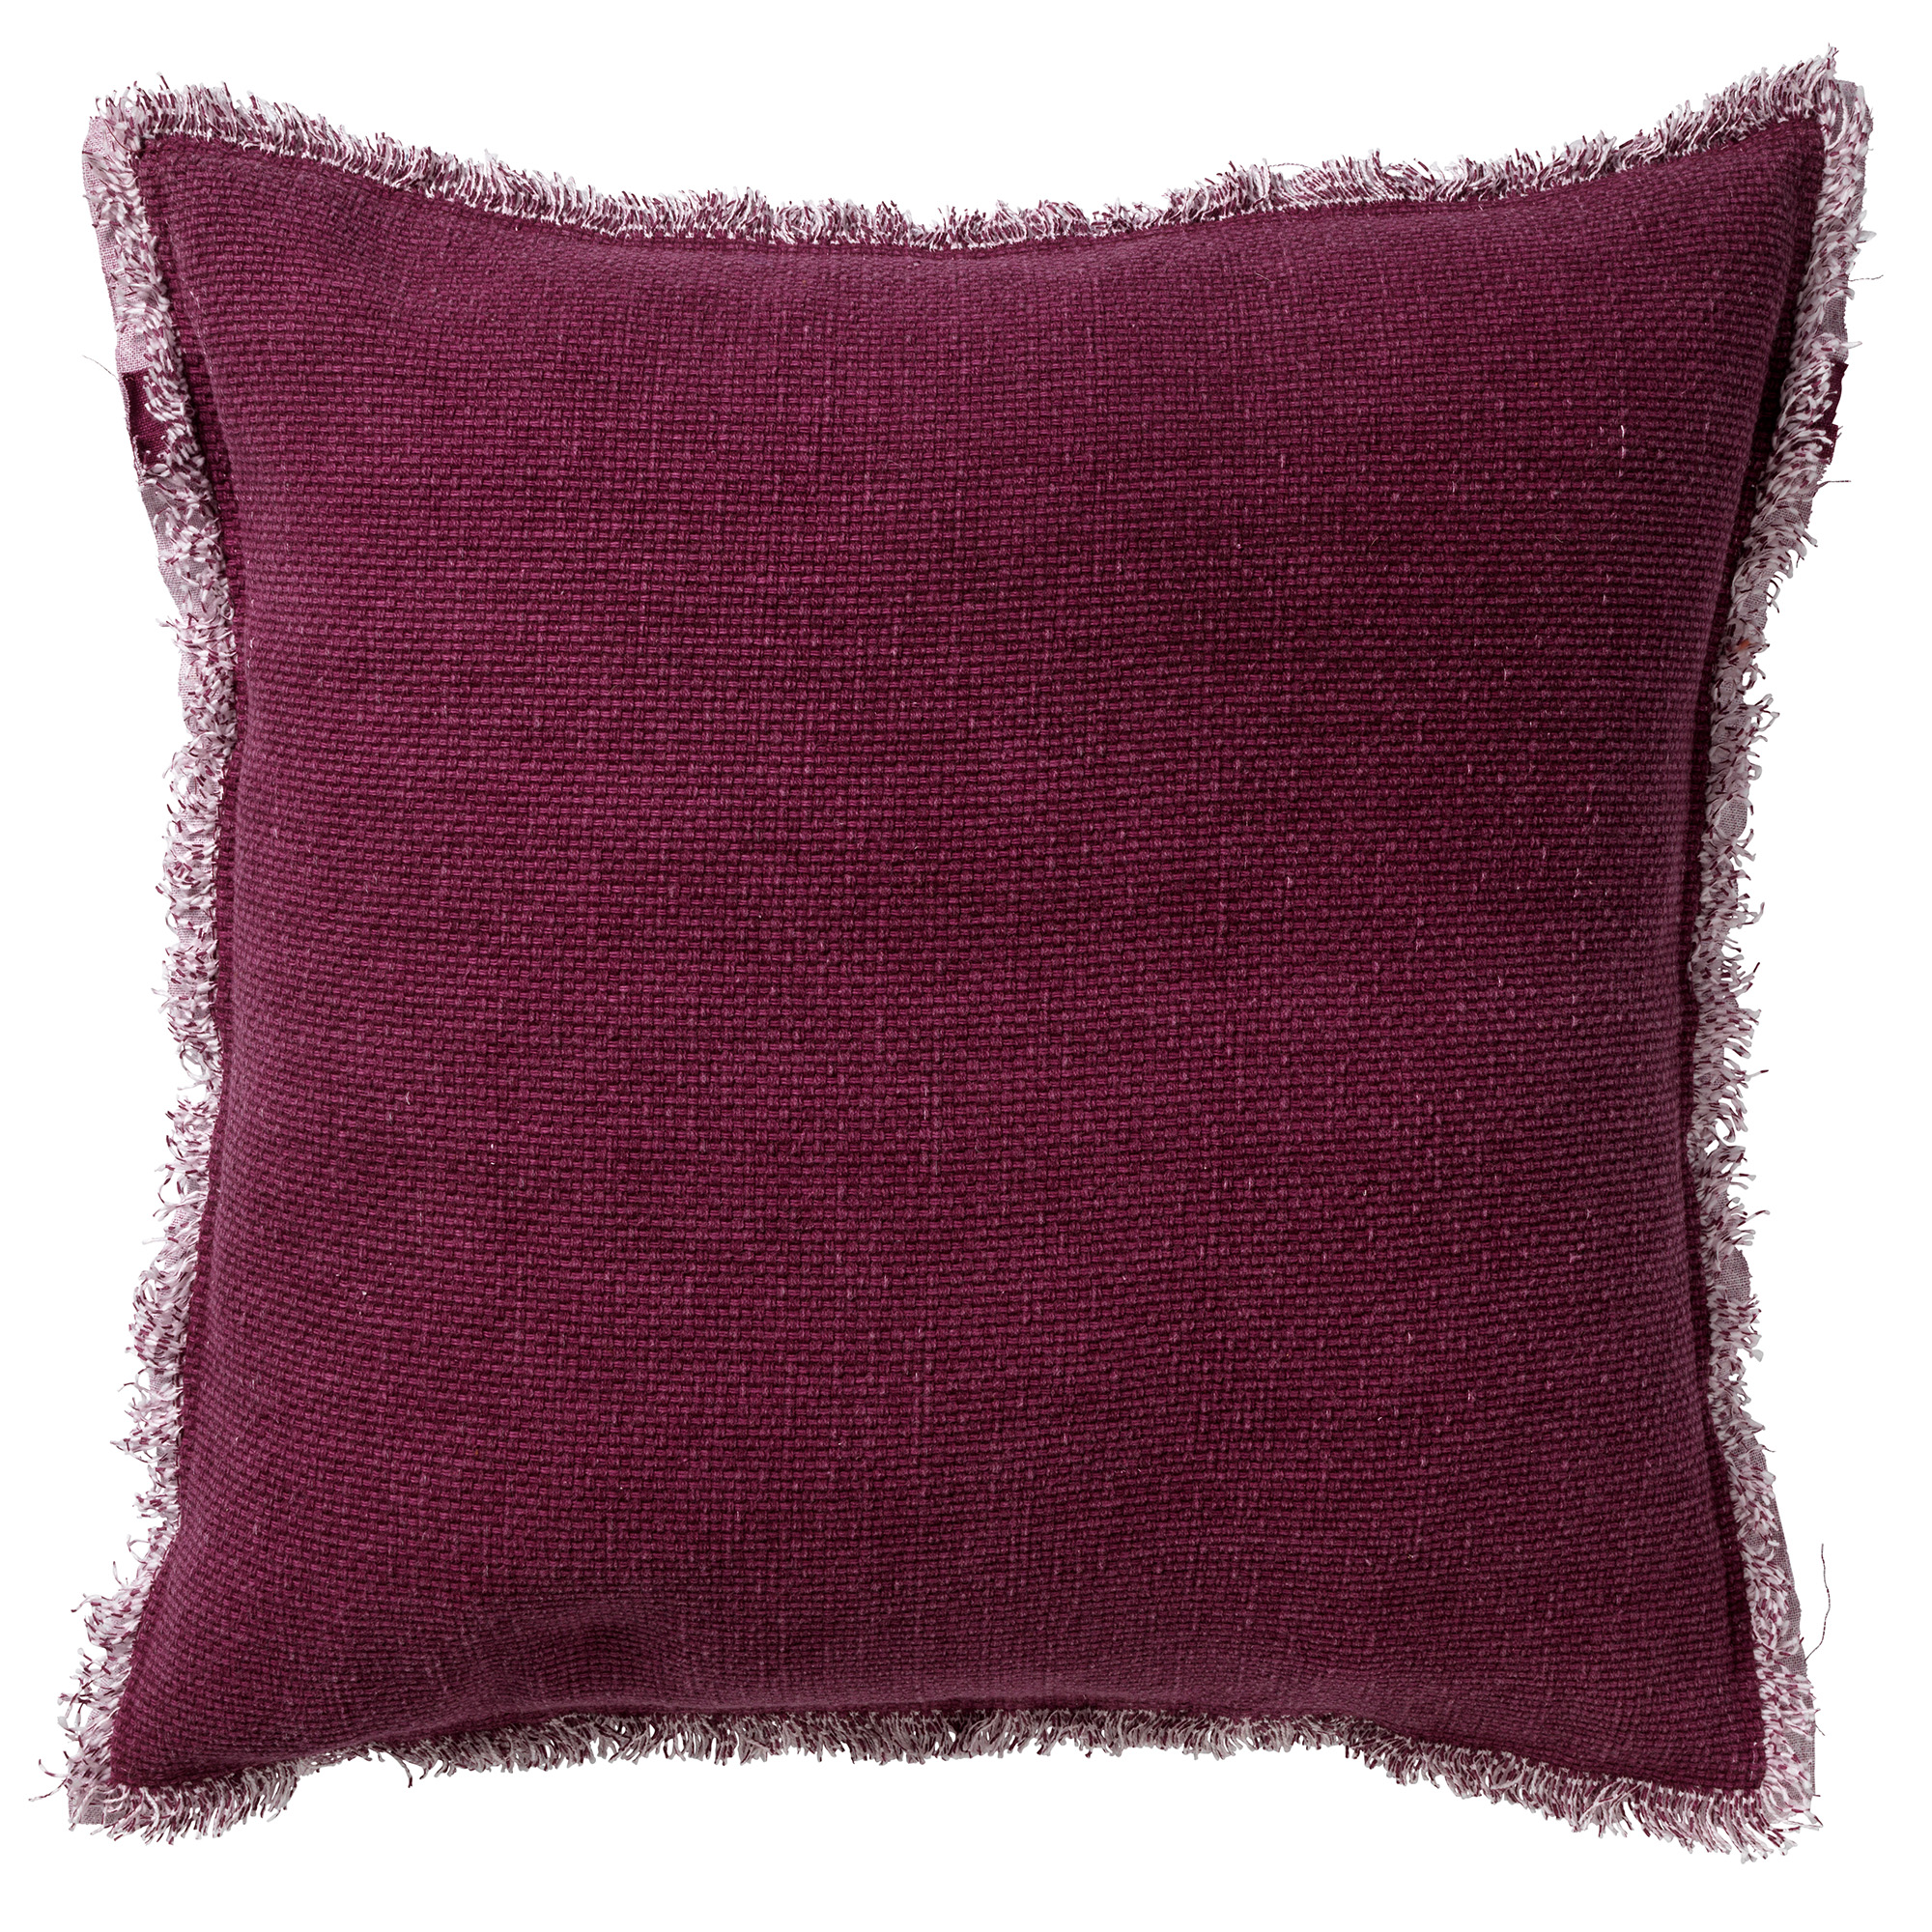 BURTO - Cushion 60x60 cm Red Plum - red